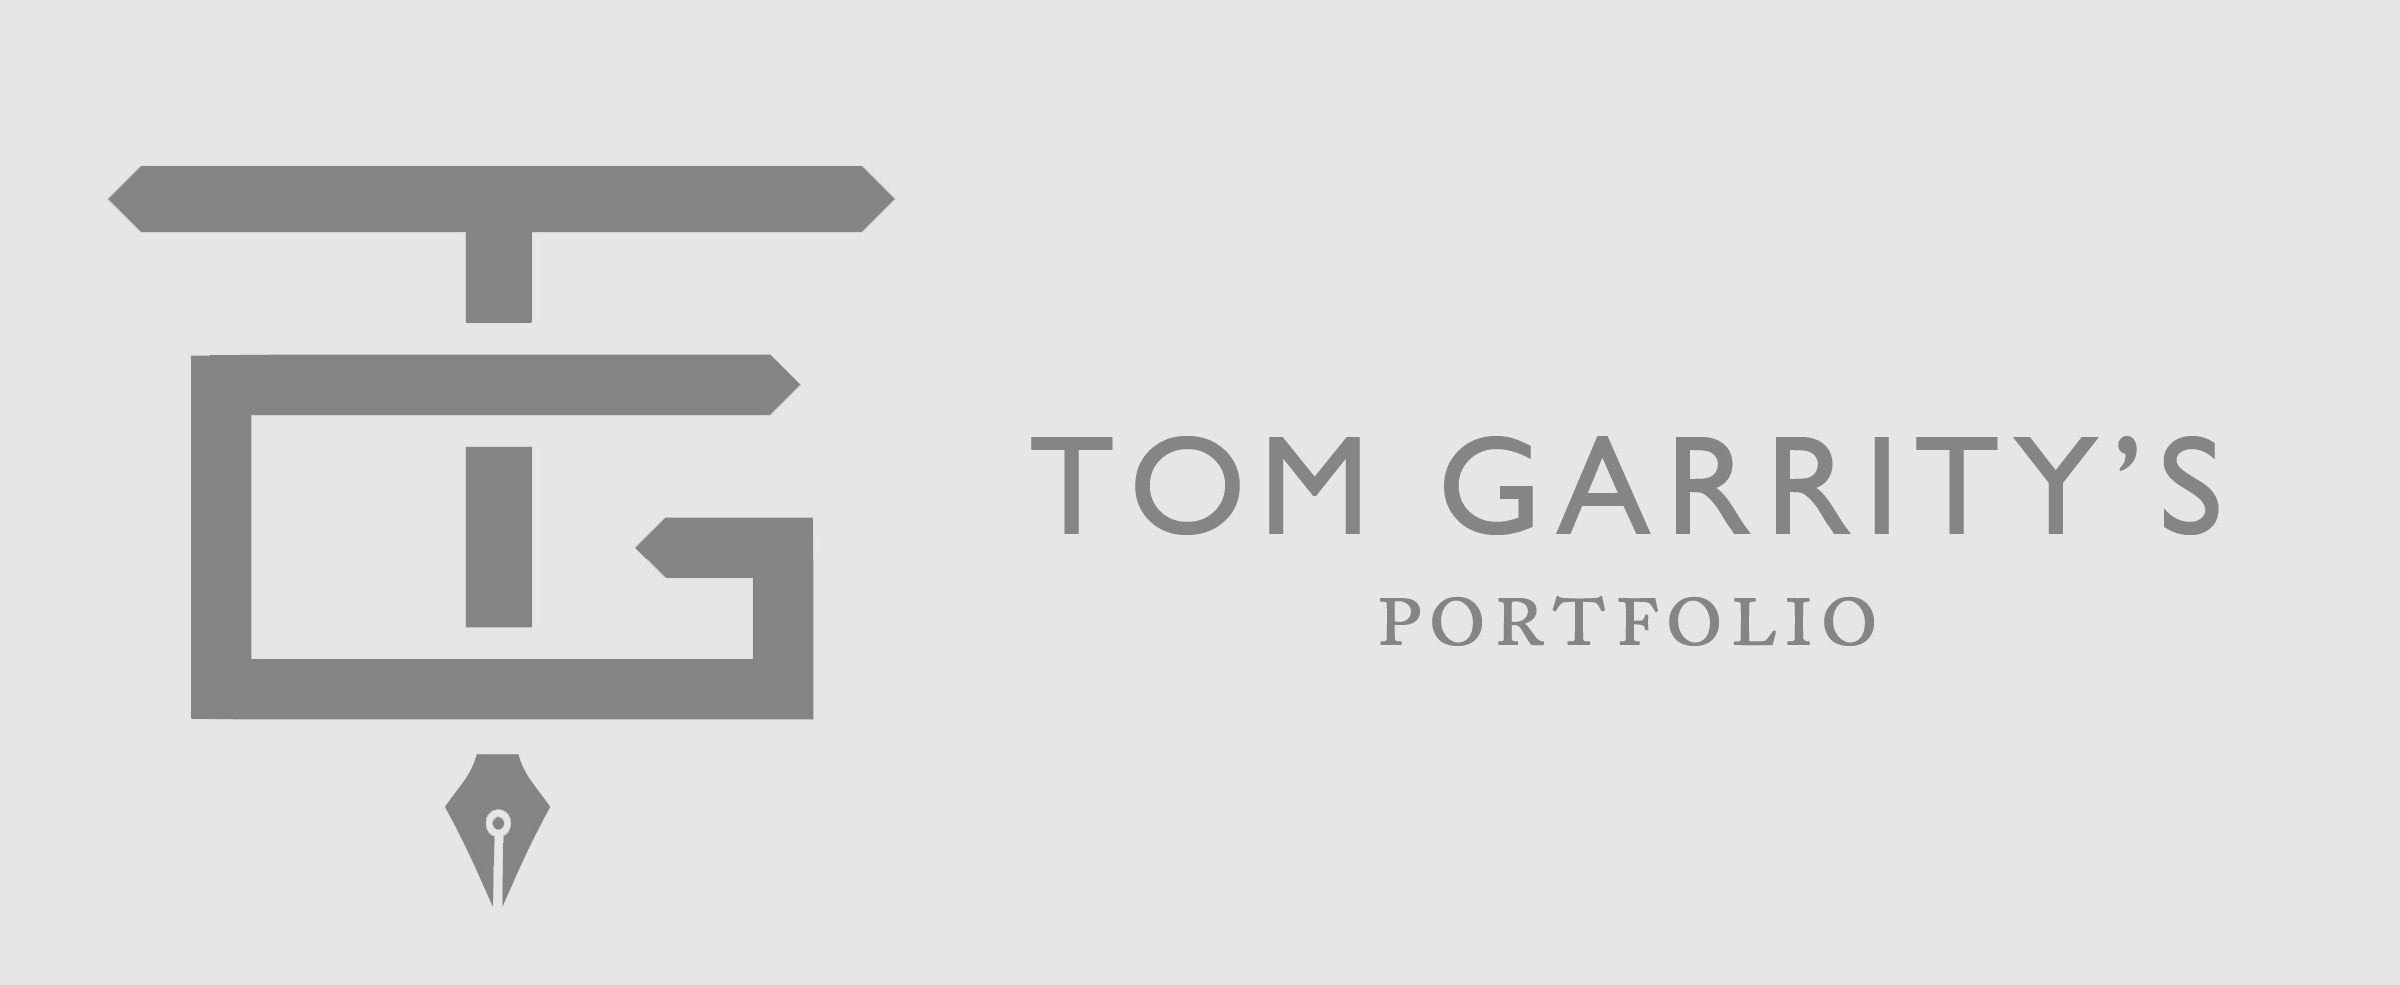 Tom Garrity's Portfolio